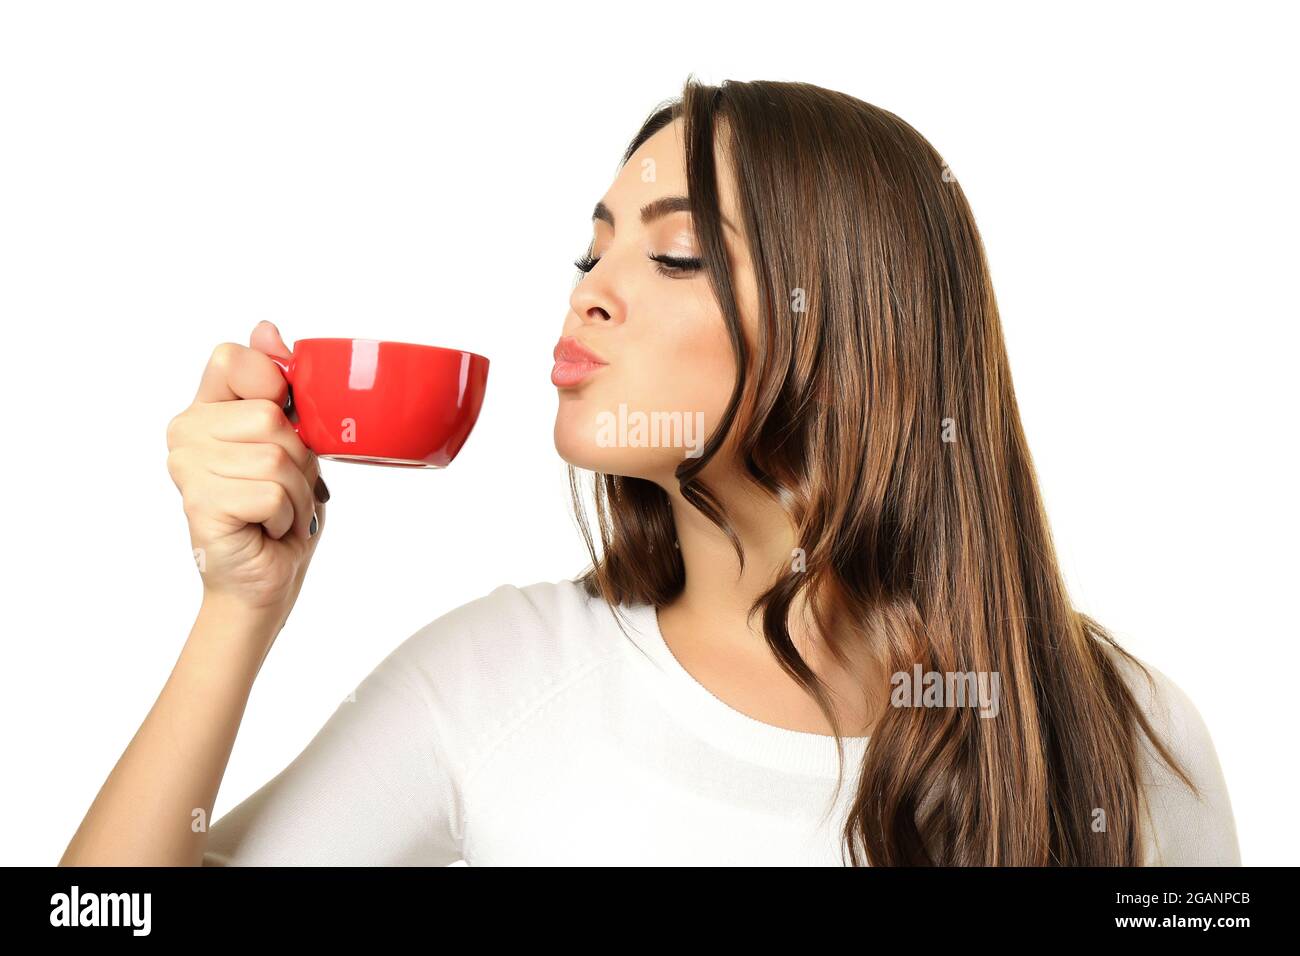 Buy She Hulk Pose Ceramic Coffee Mugs-White Online in India